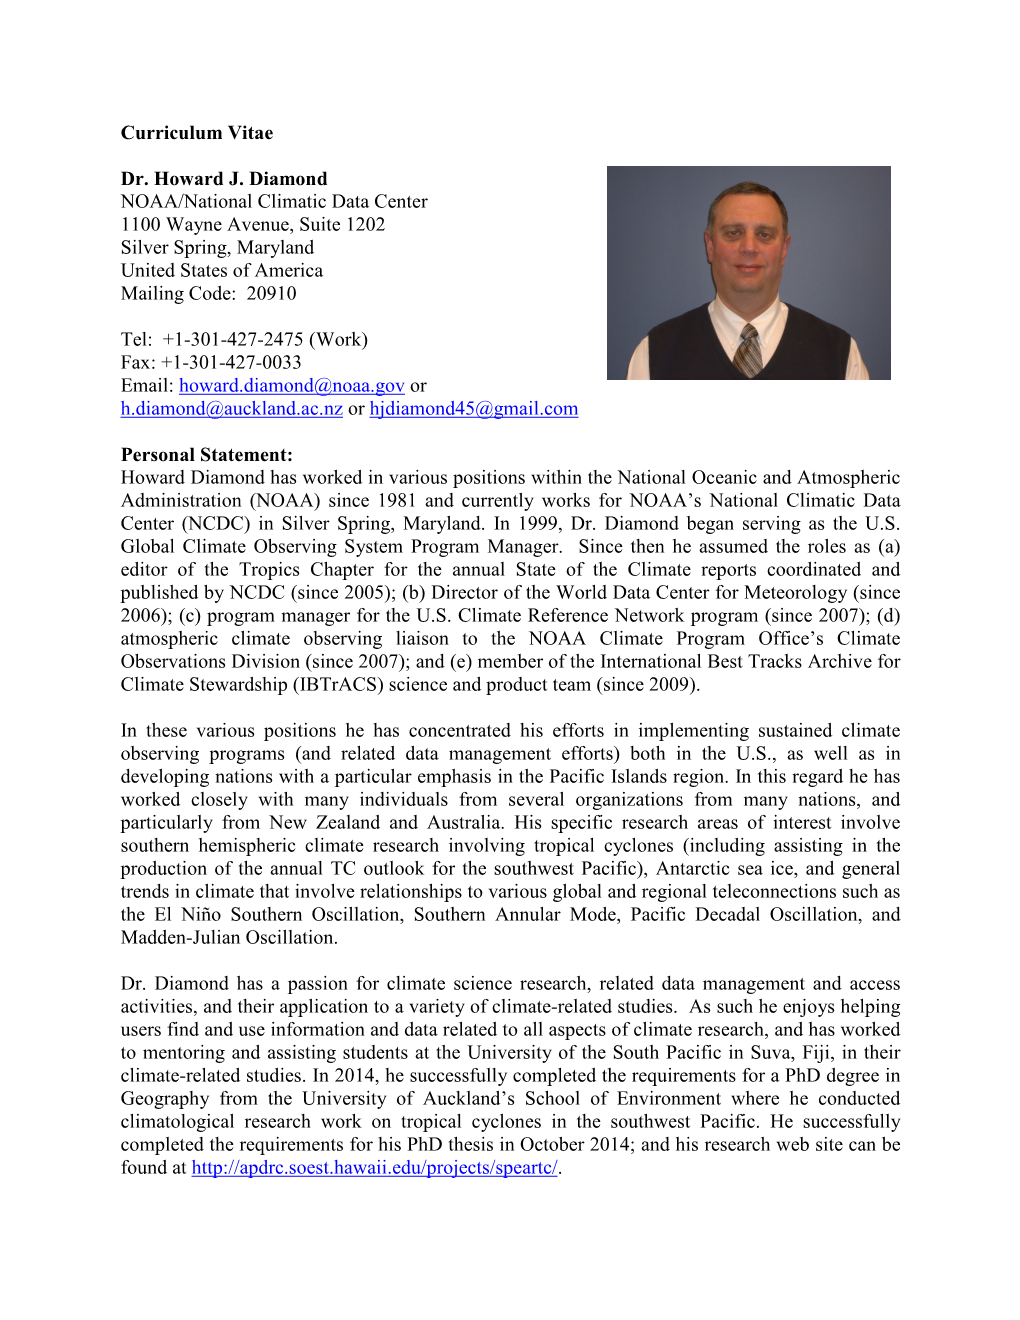 Curriculum Vitae Dr. Howard J. Diamond NOAA/National Climatic